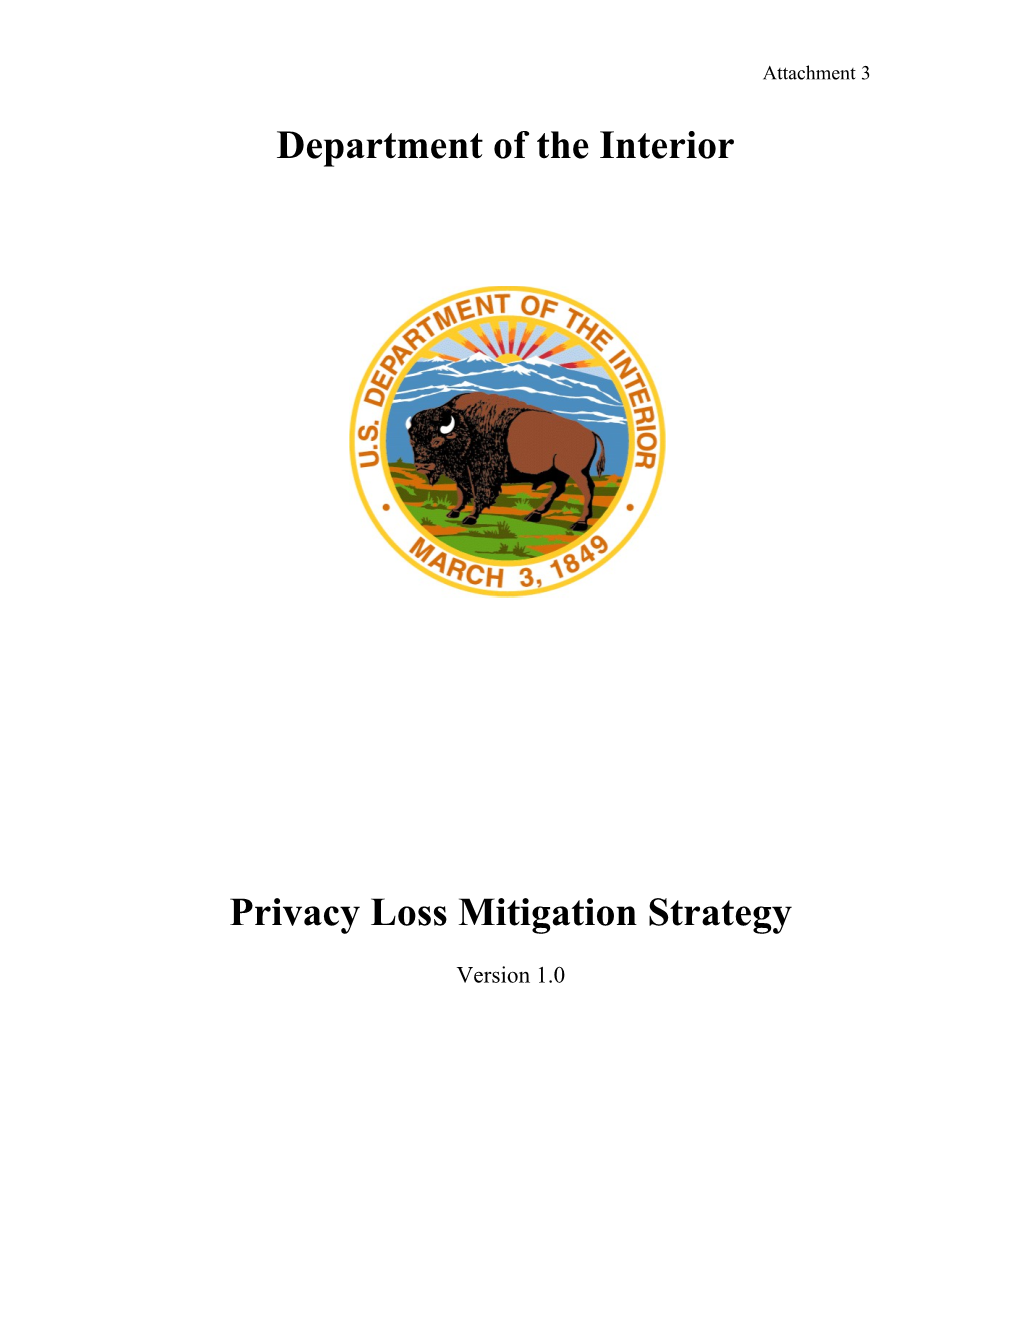 Privacy Loss Mitigation Strategy